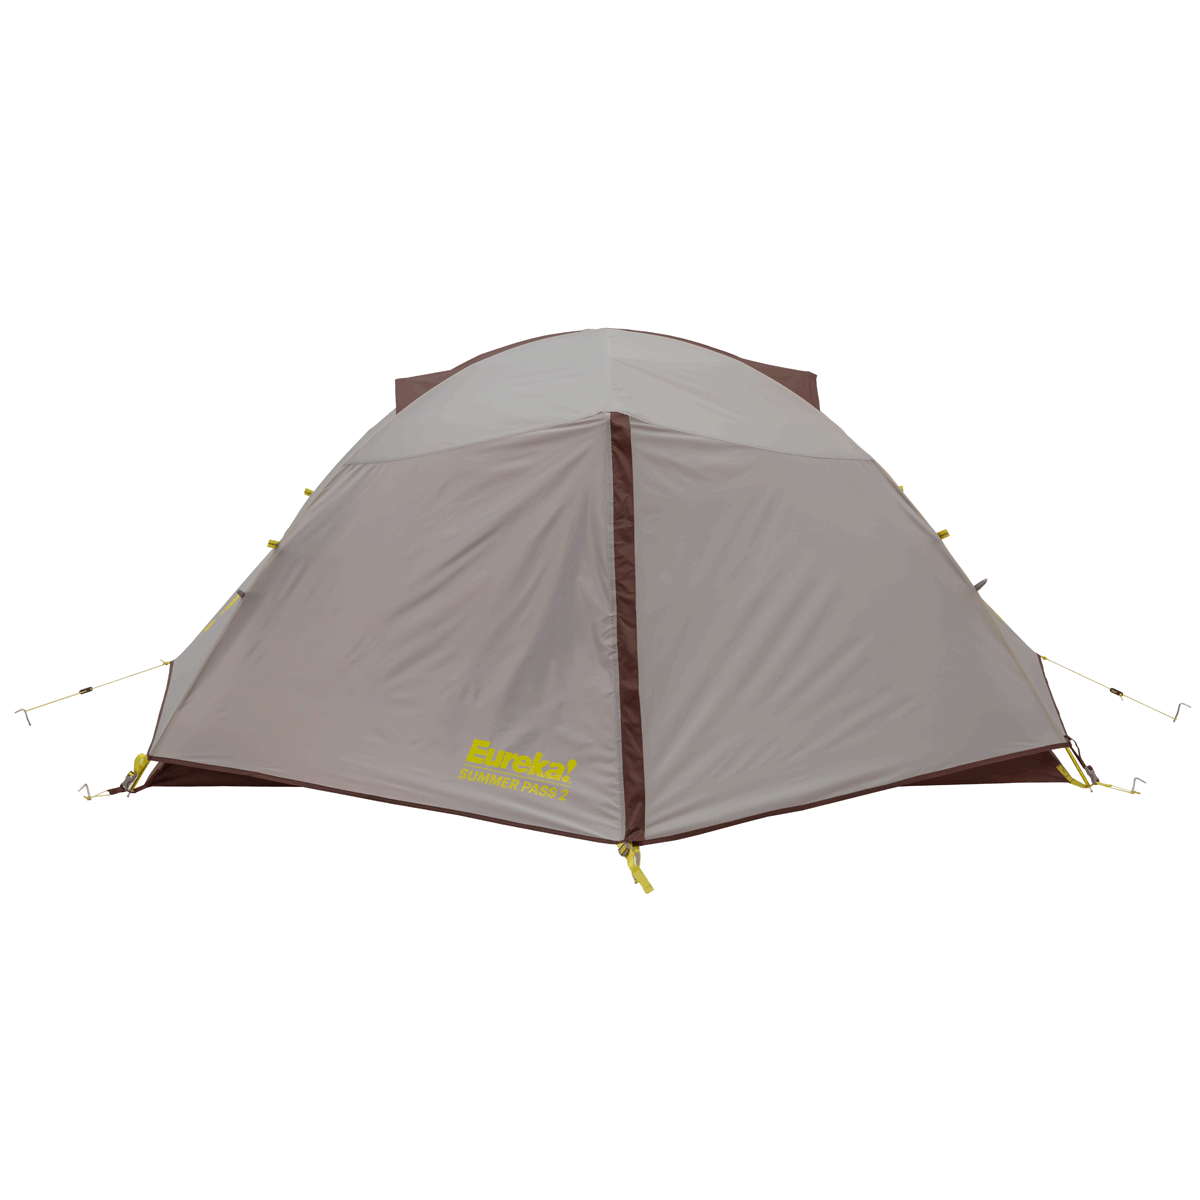 Summer Pass 2 tent rainfly rear vestibule